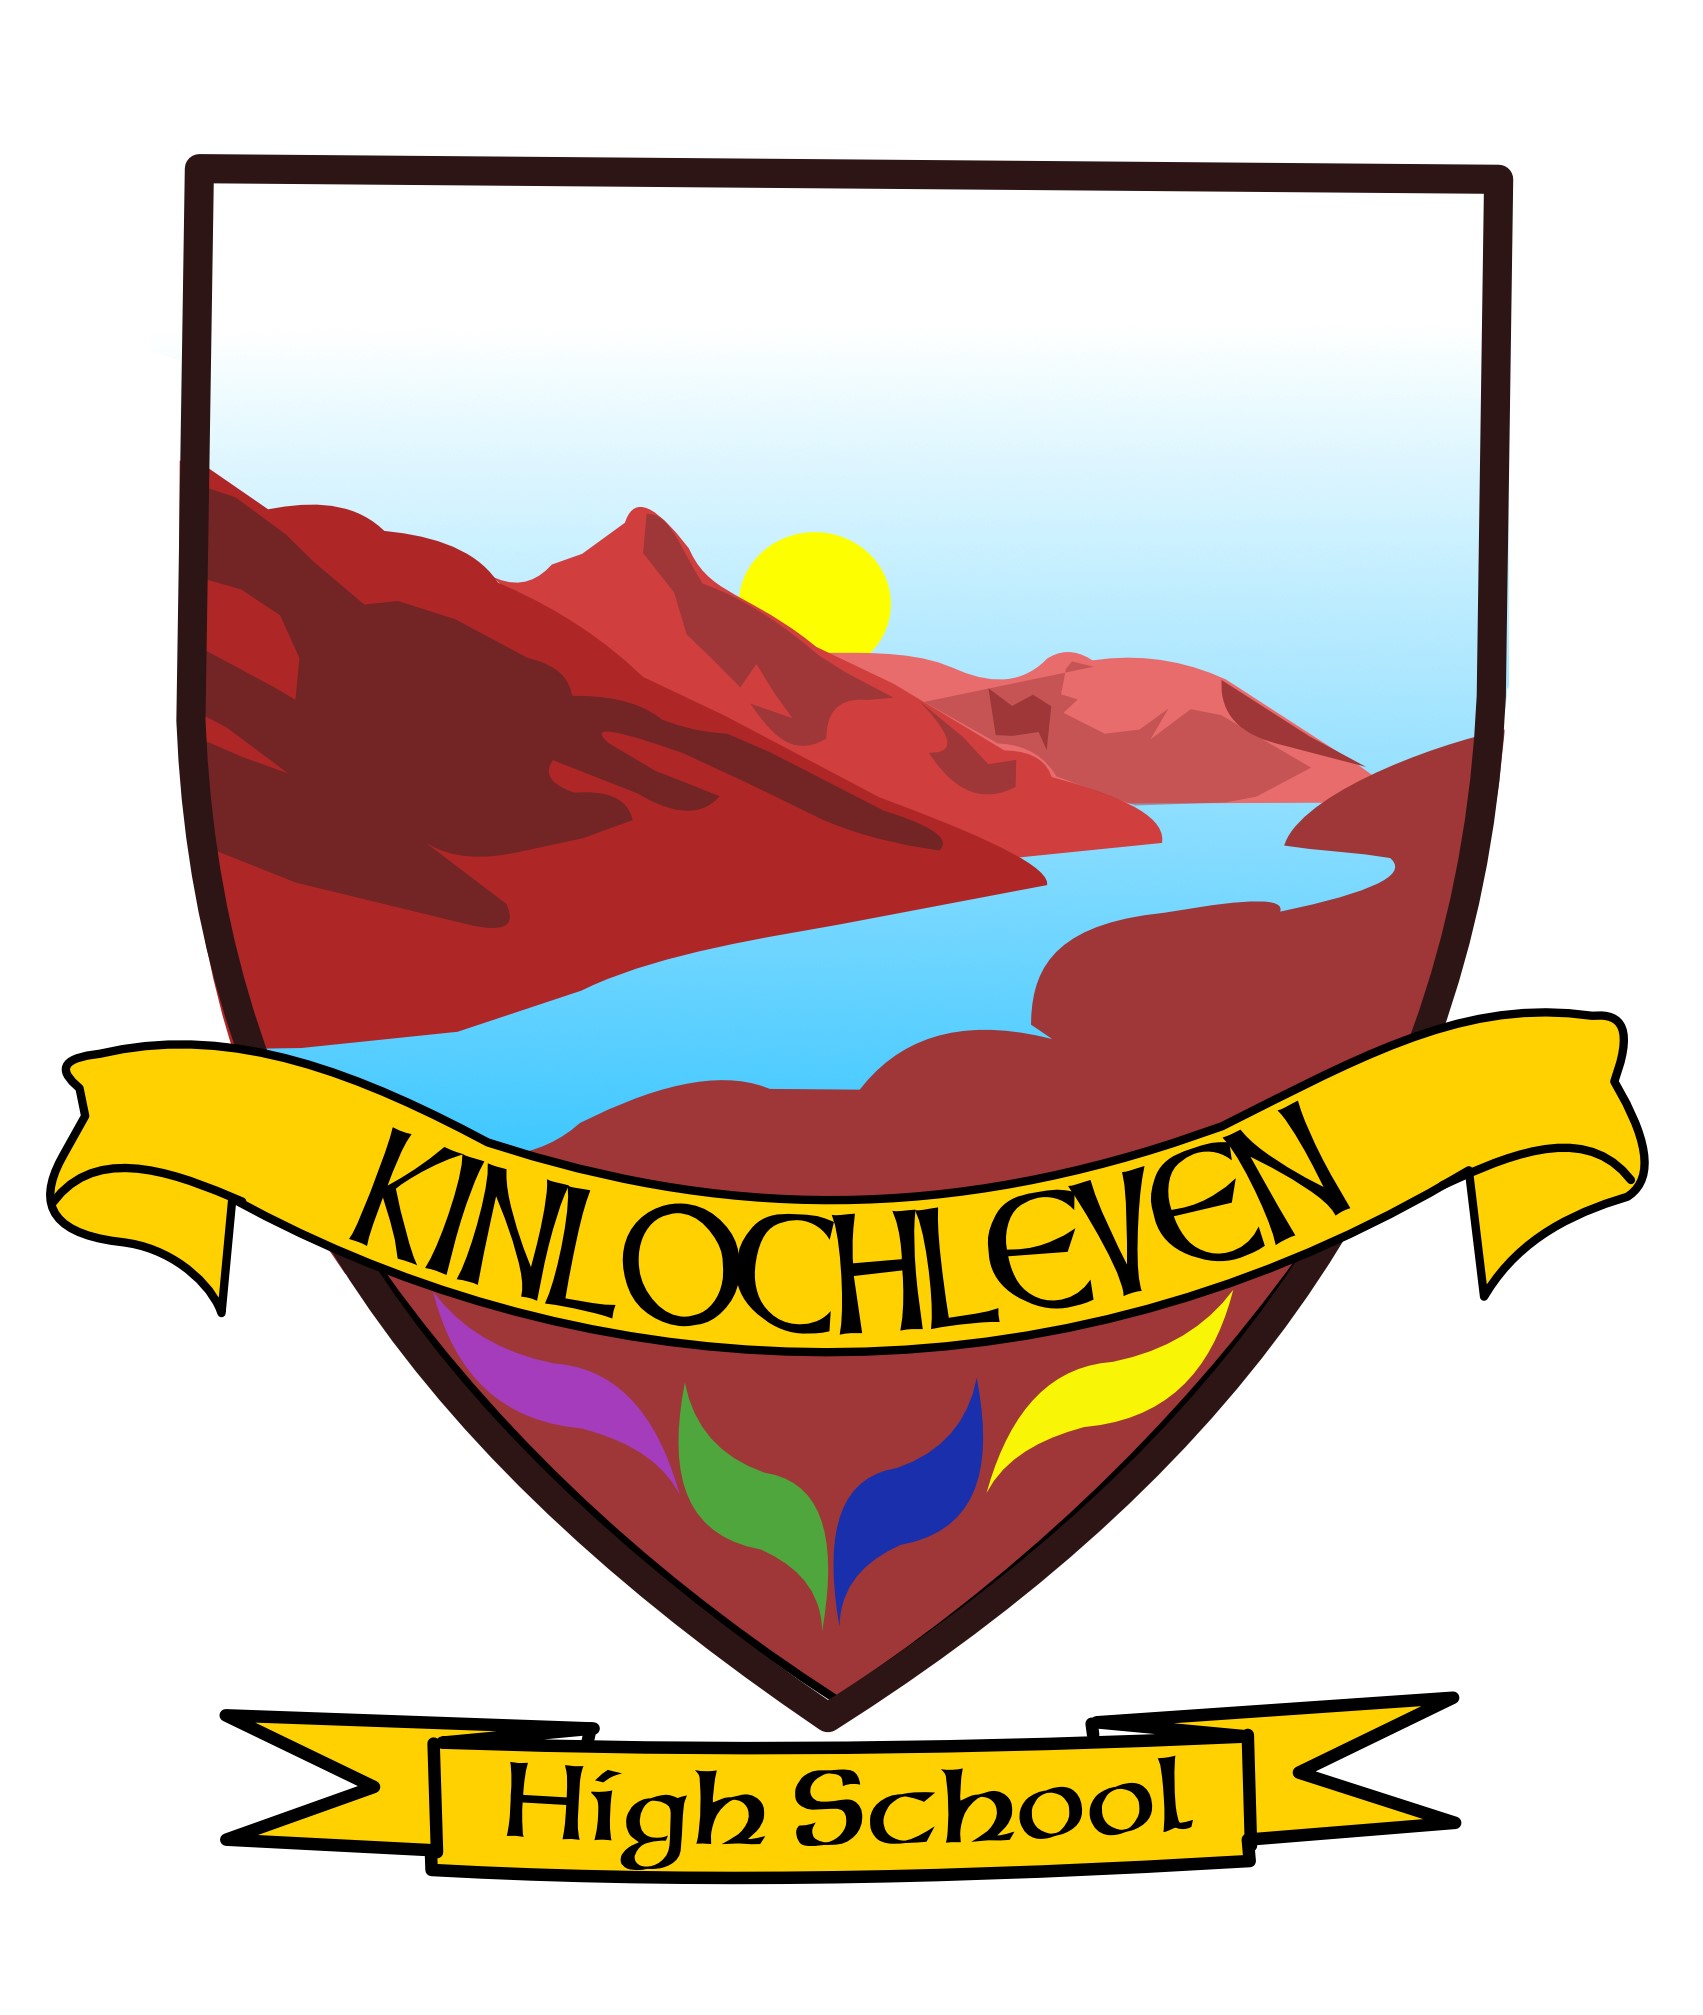 Kinlochleven High School